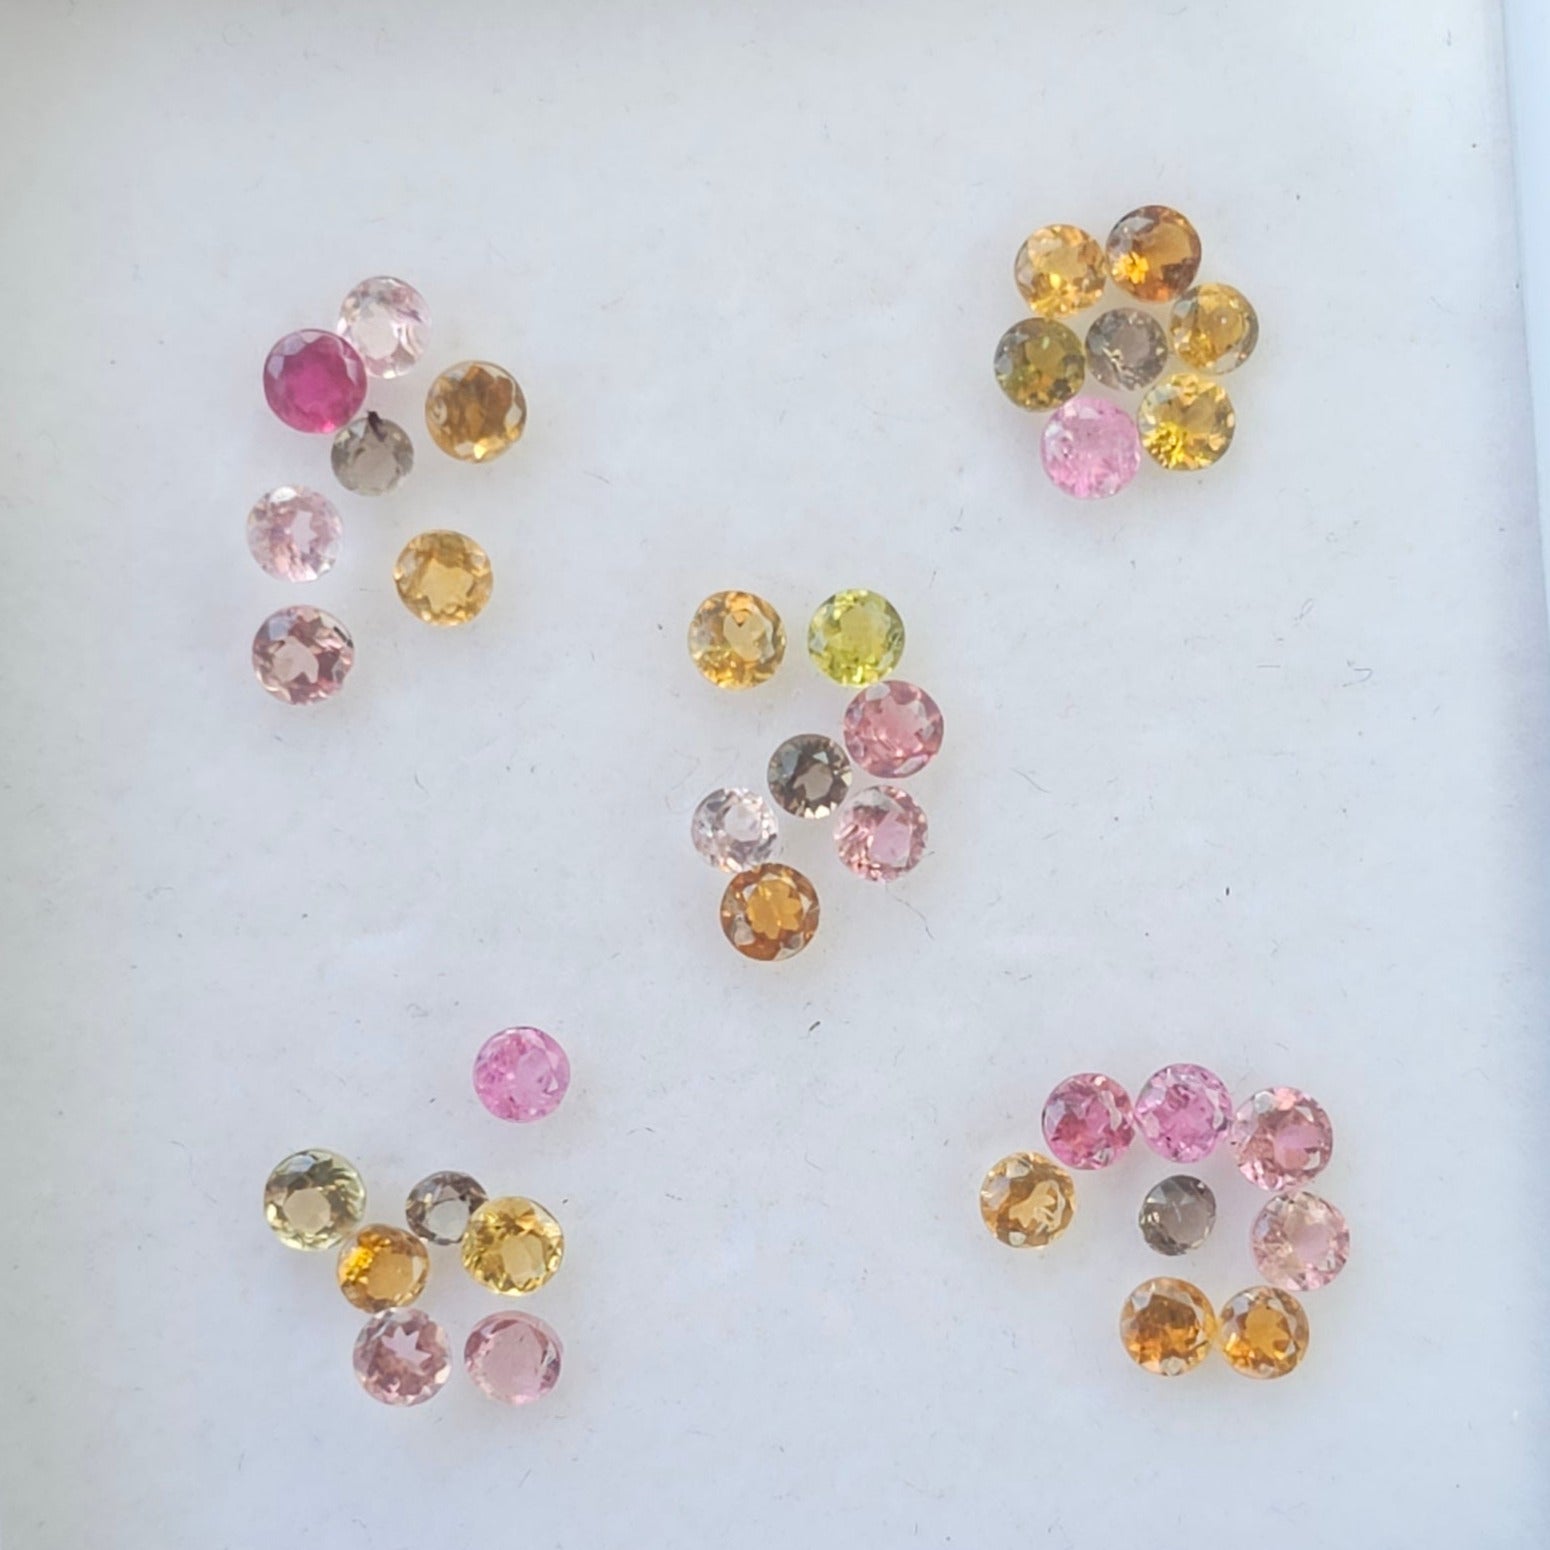 36 Pcs Natural Multi Tourmaline Faceted Gemstones Round Shape I Size 2mm to 3mm - The LabradoriteKing